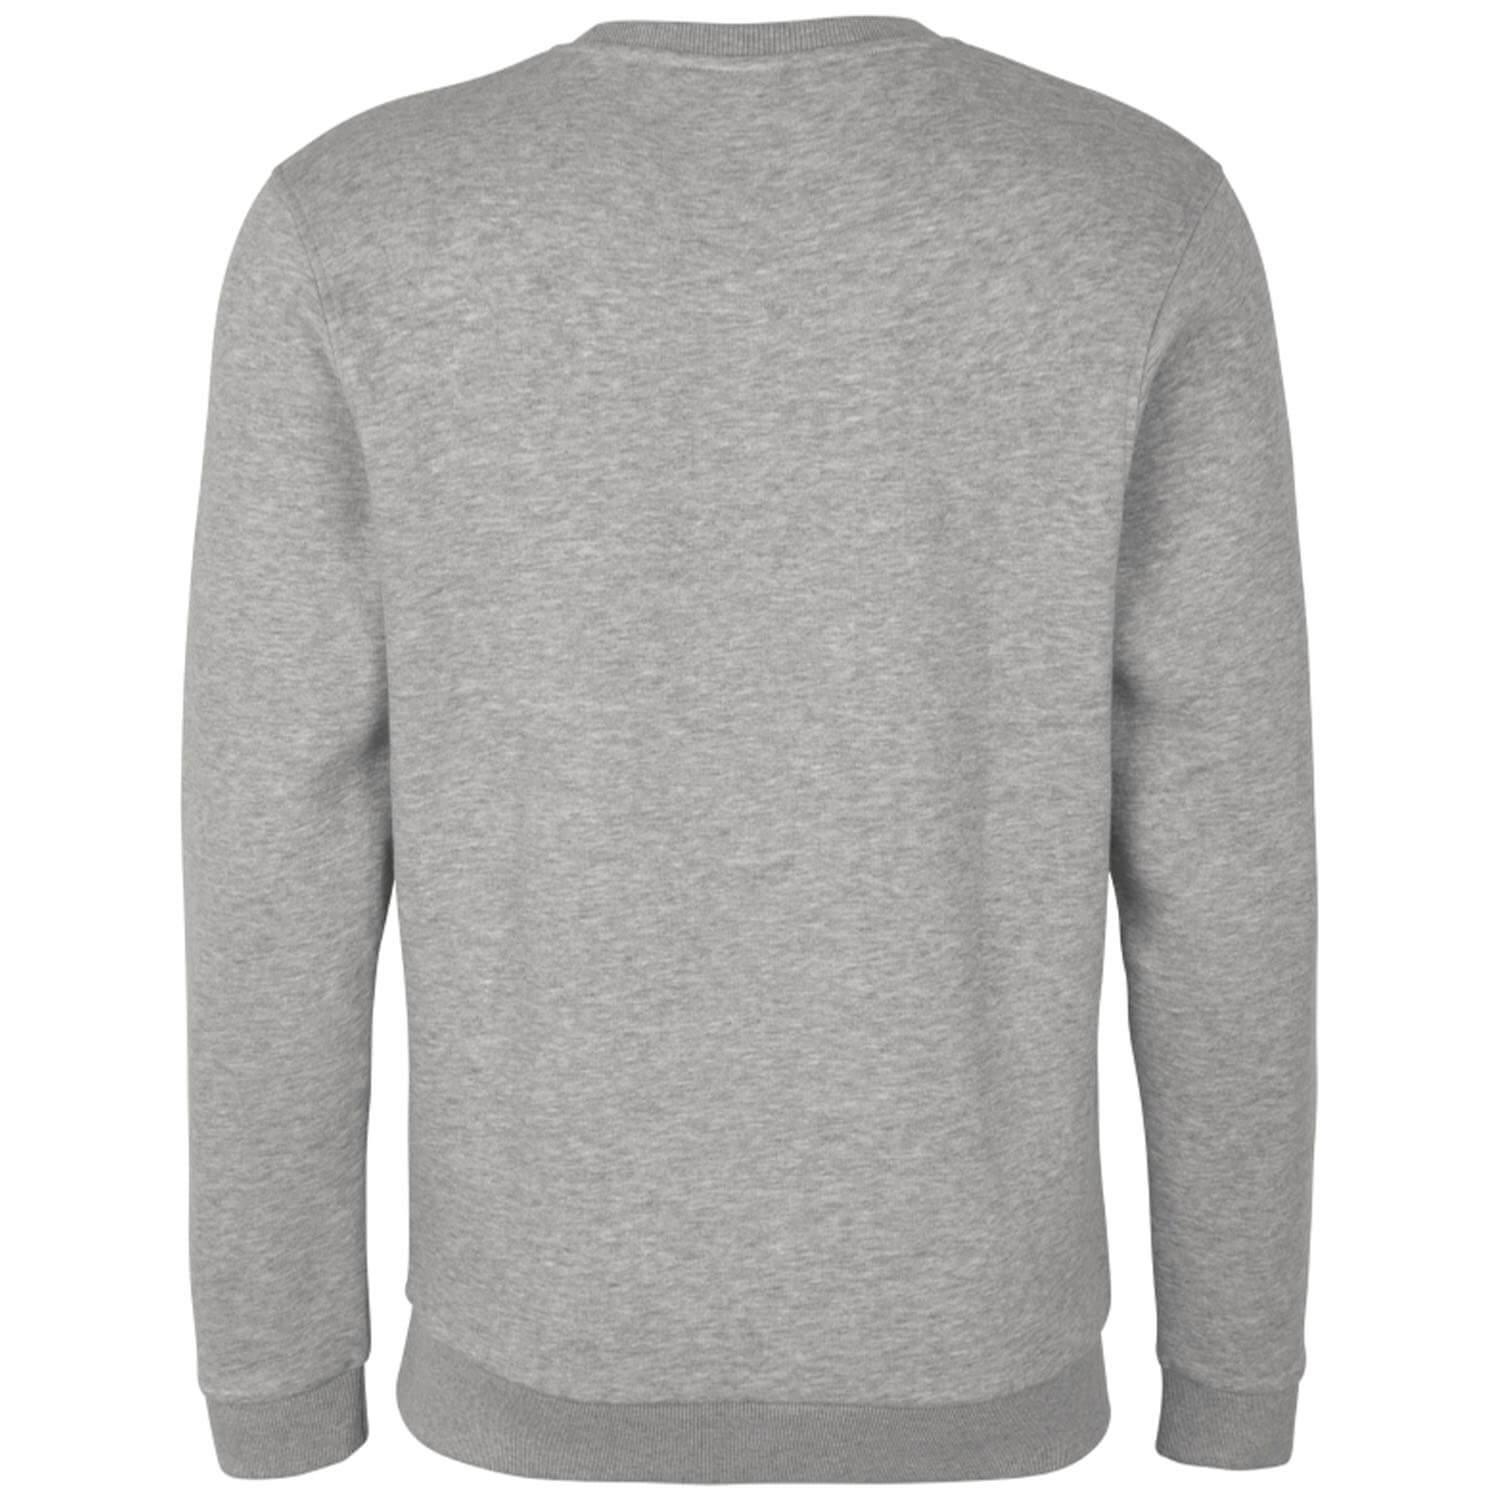 Seeland Sweatshirt Cryo (Dark Grey Melange)